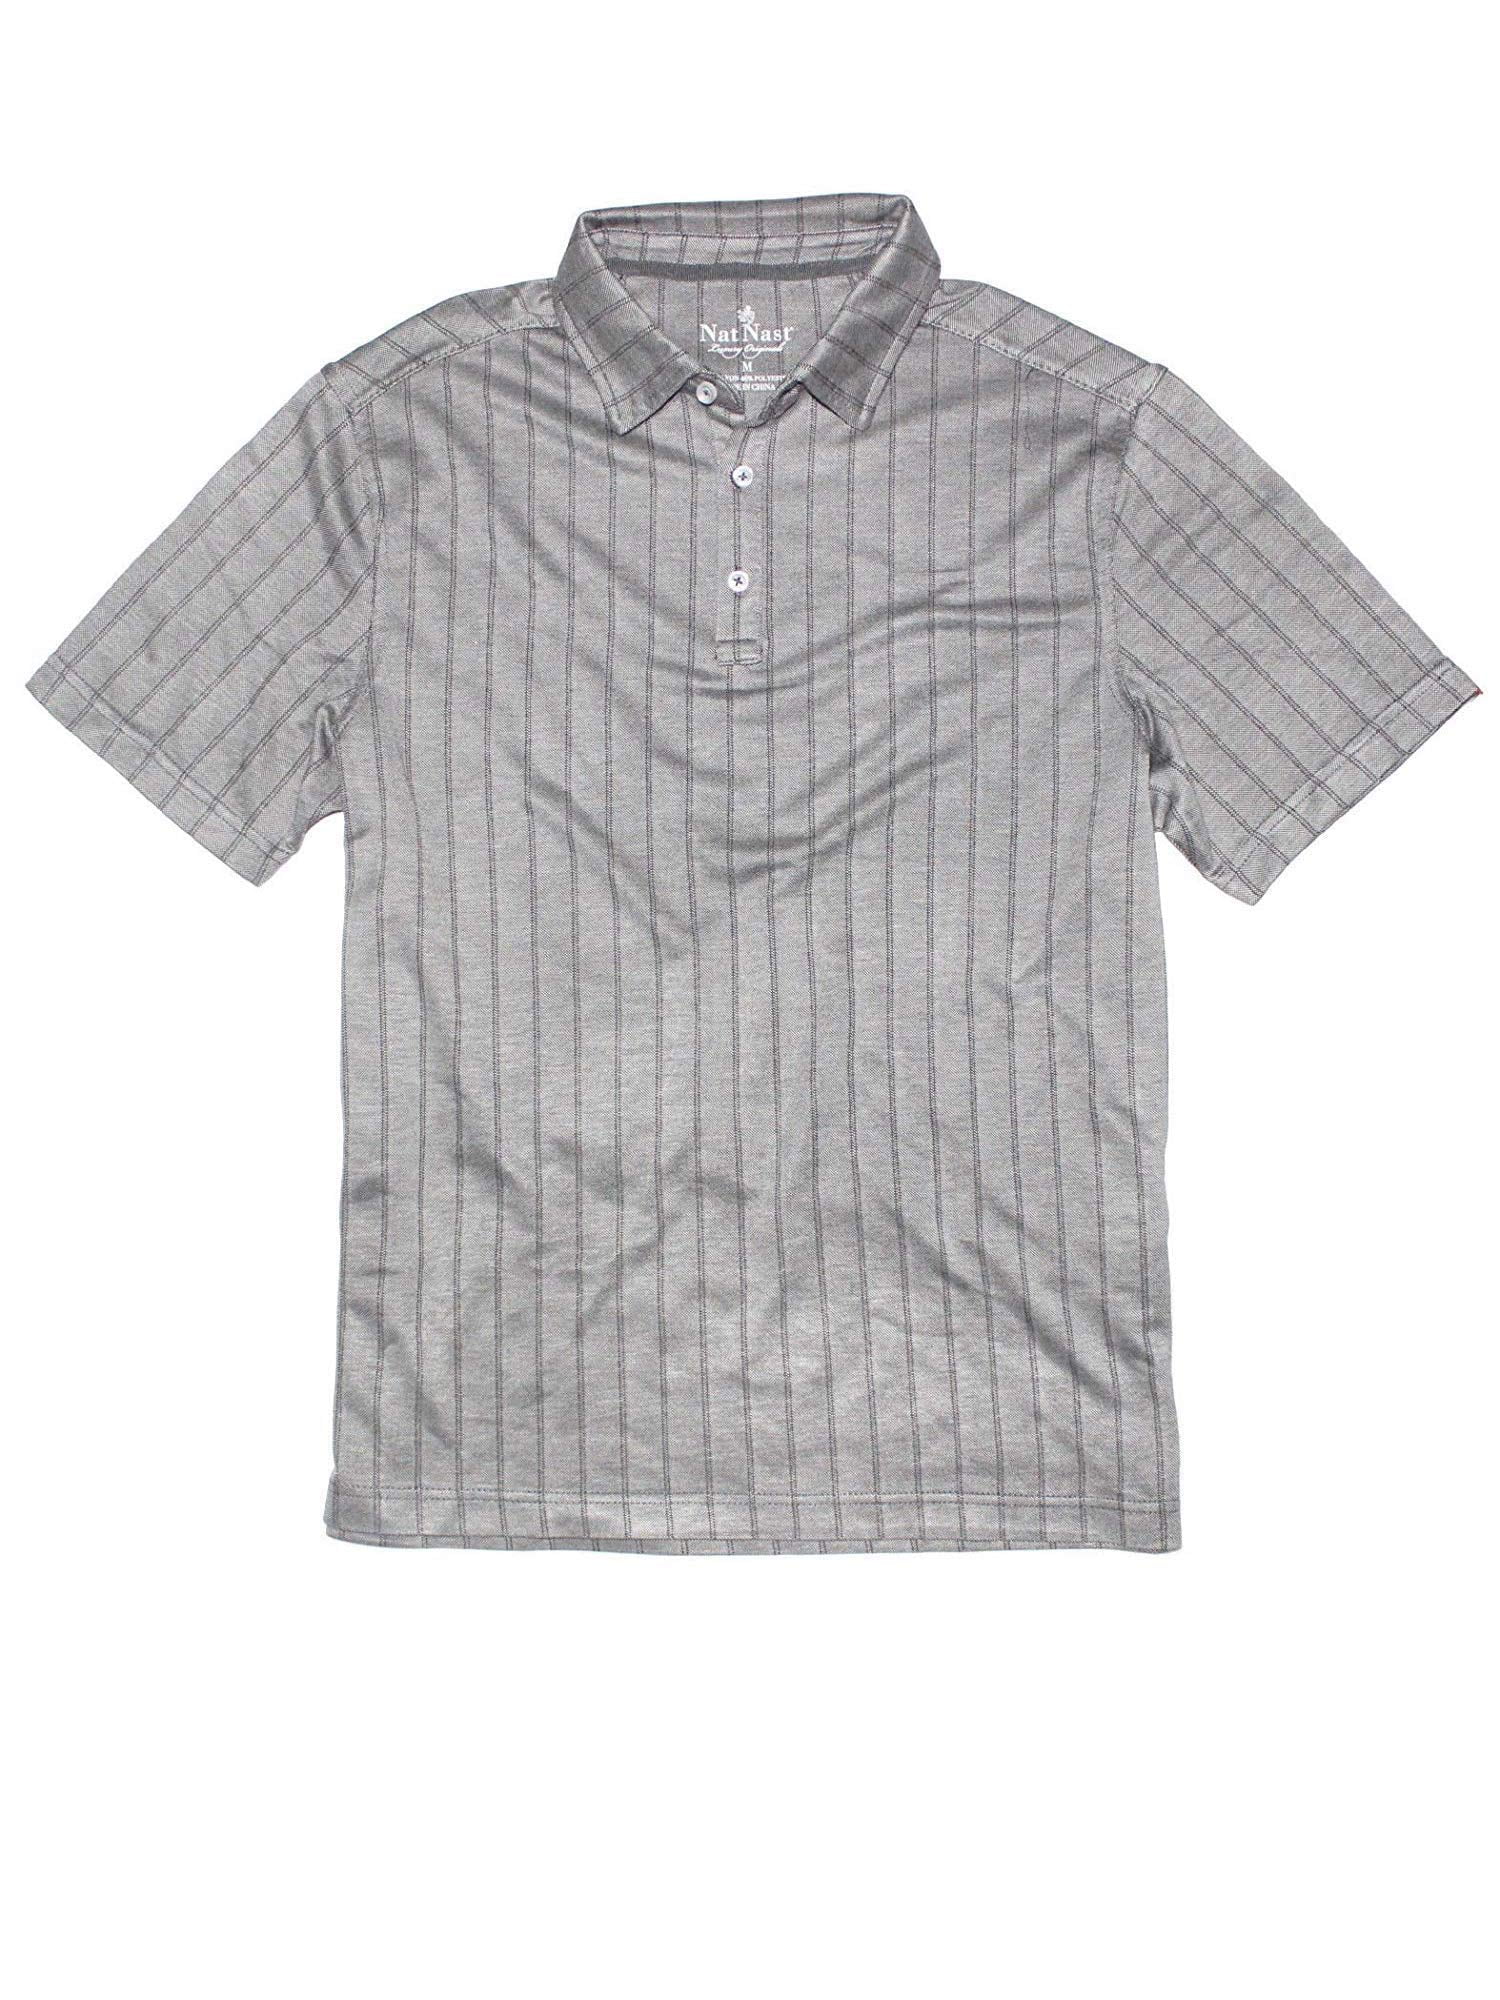 Nat Nast Original Luxury Men's Short Sleeve Polo Shirt, Gray, Medium ...